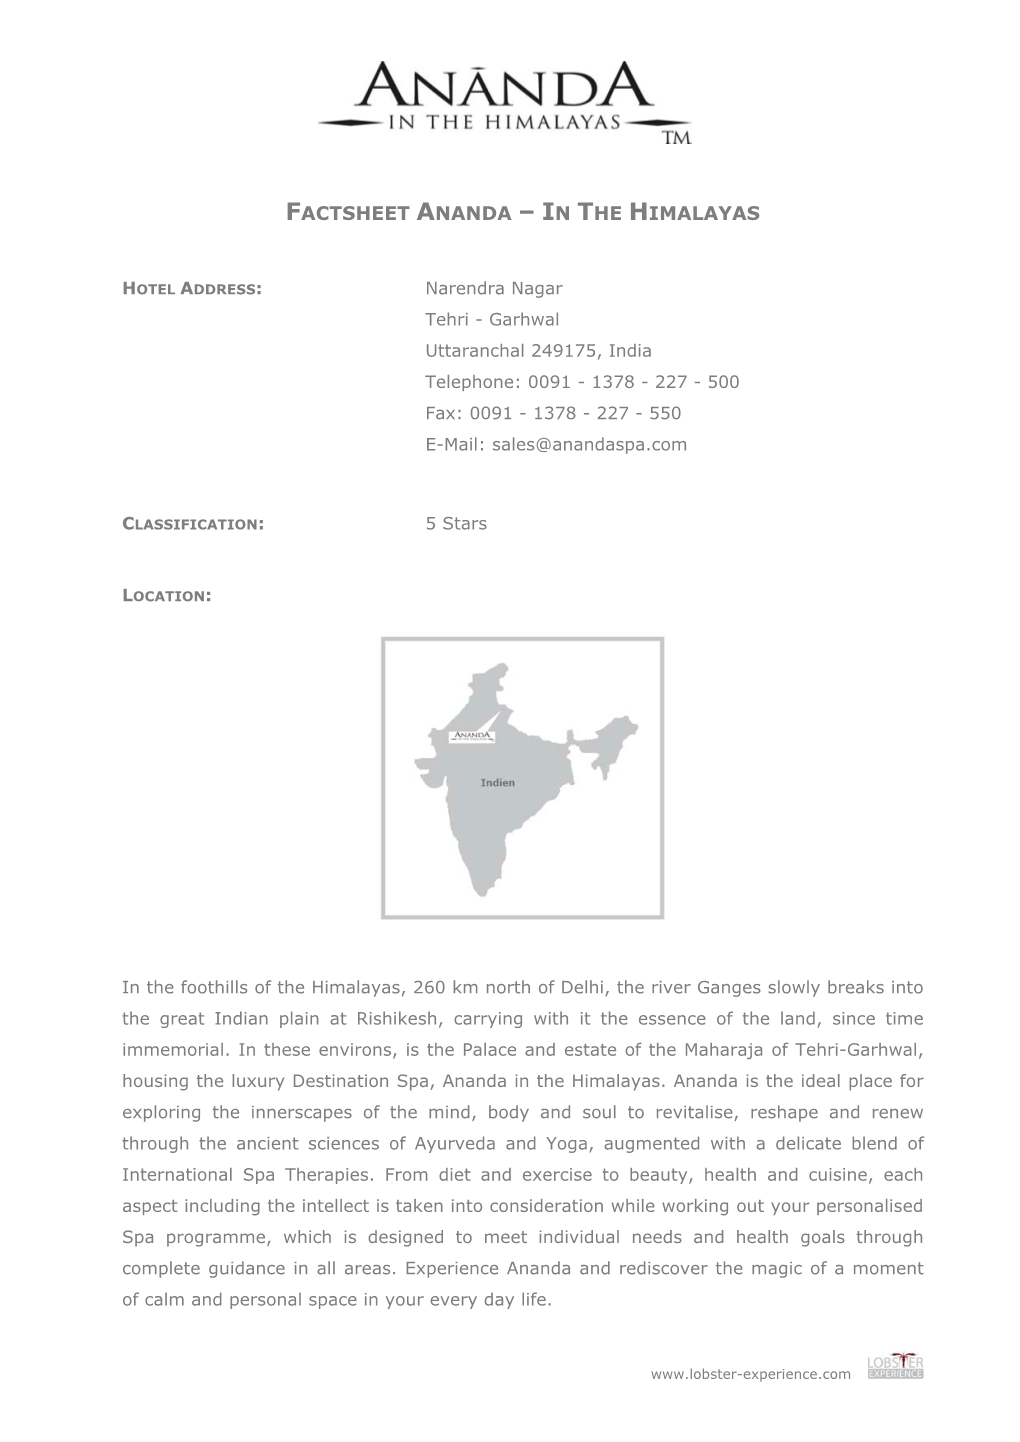 Factsheet Ananda – in the Himalayas